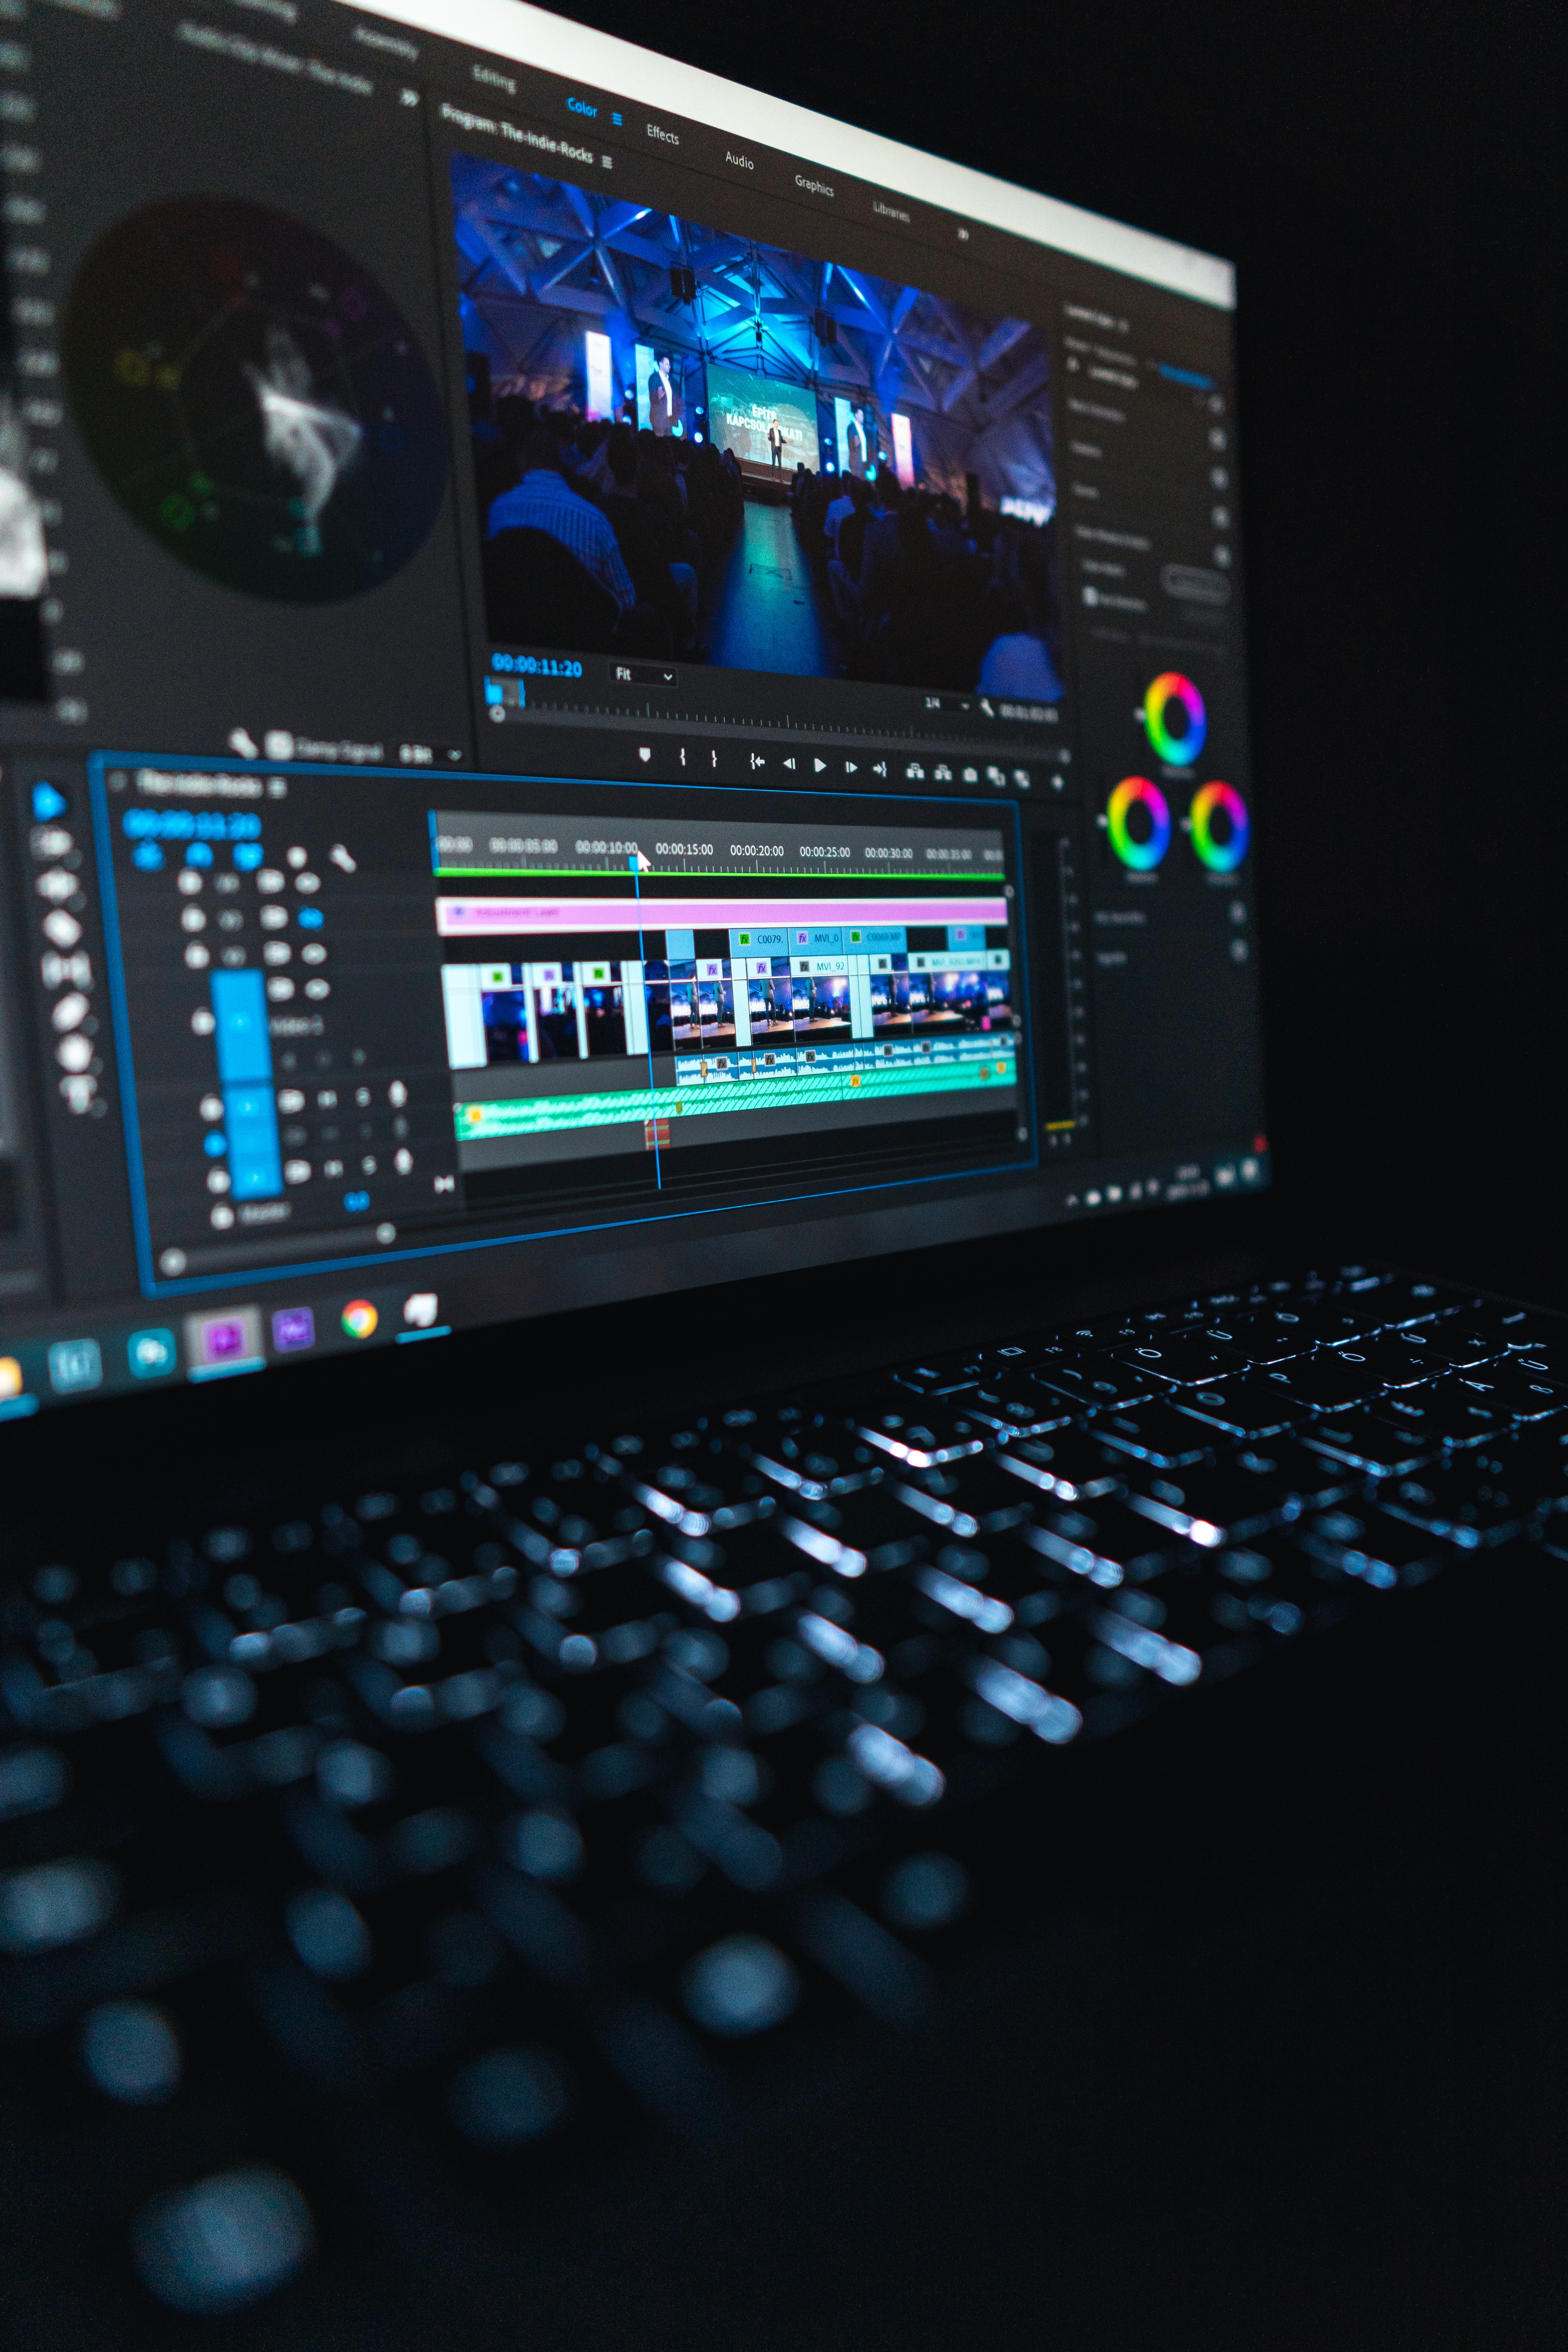 Black laptop computer showing Premier Pro workflow during video editing